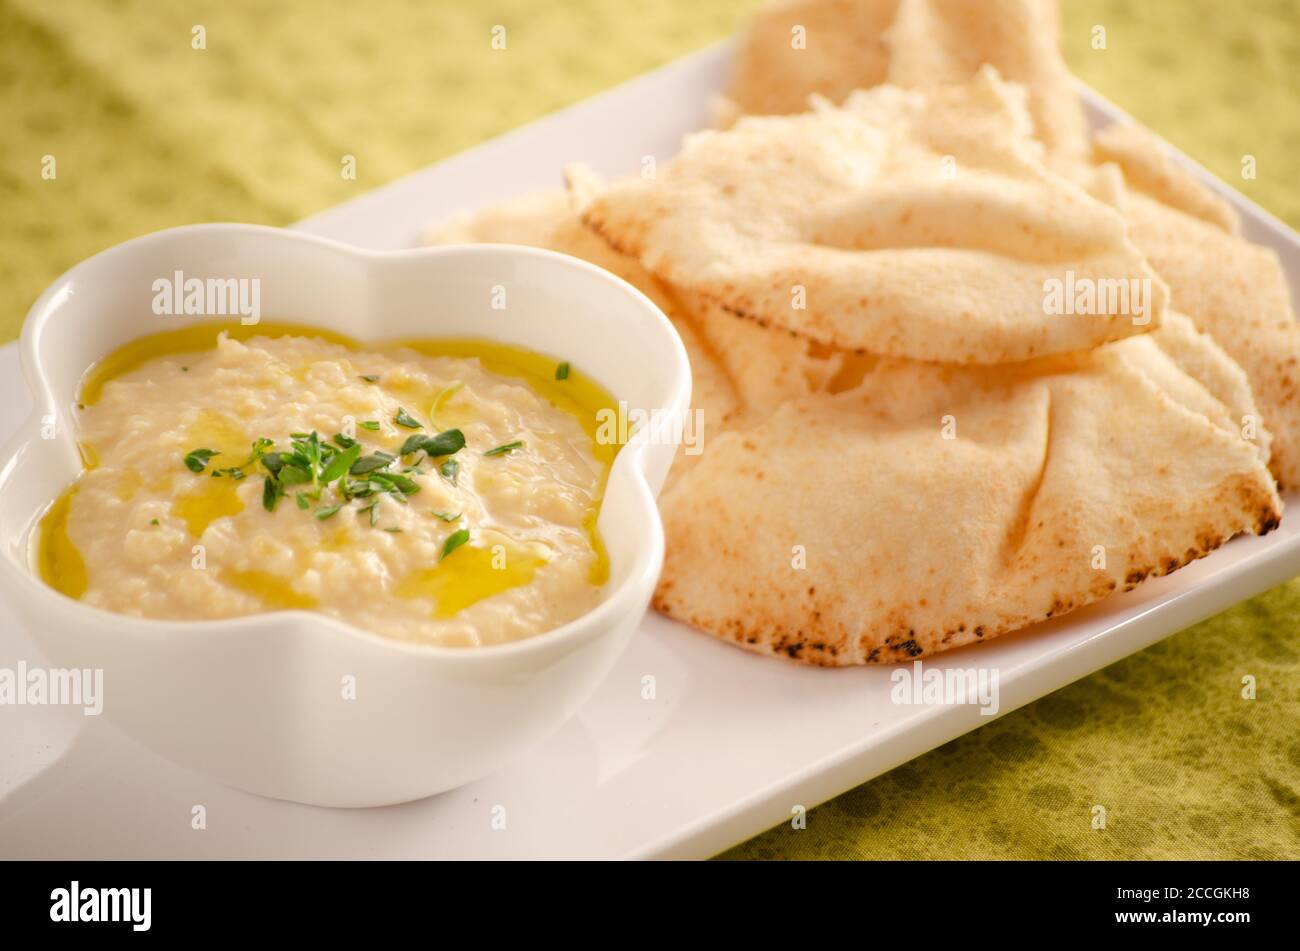 Un tazón de hummus fresco y pan de pita Foto de stock